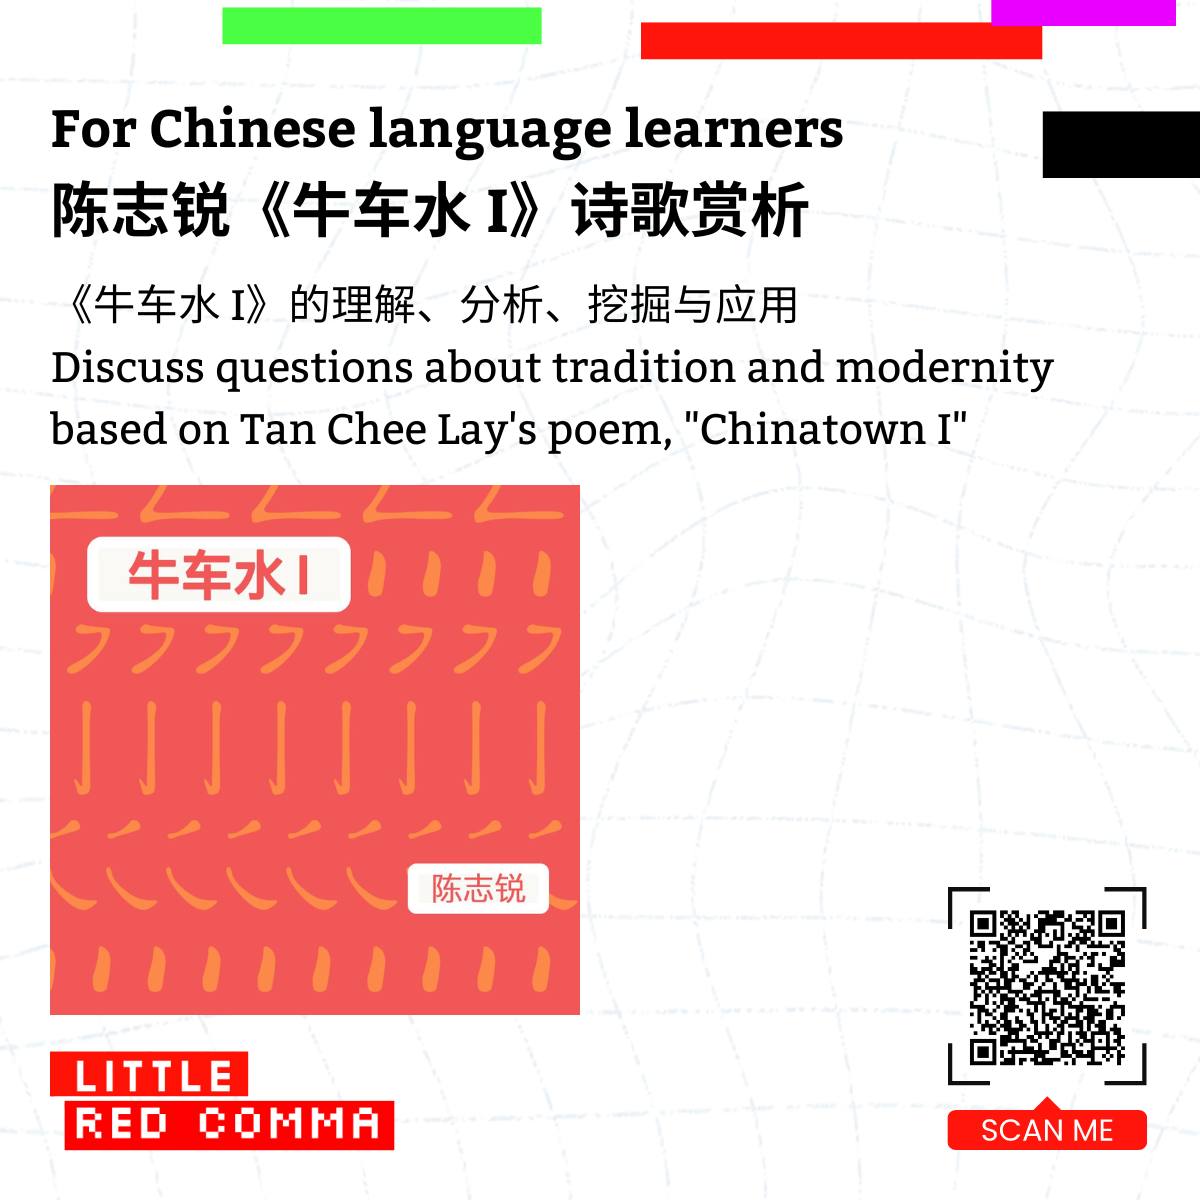 little red comma educators guides - Chinatown I (mandarin)